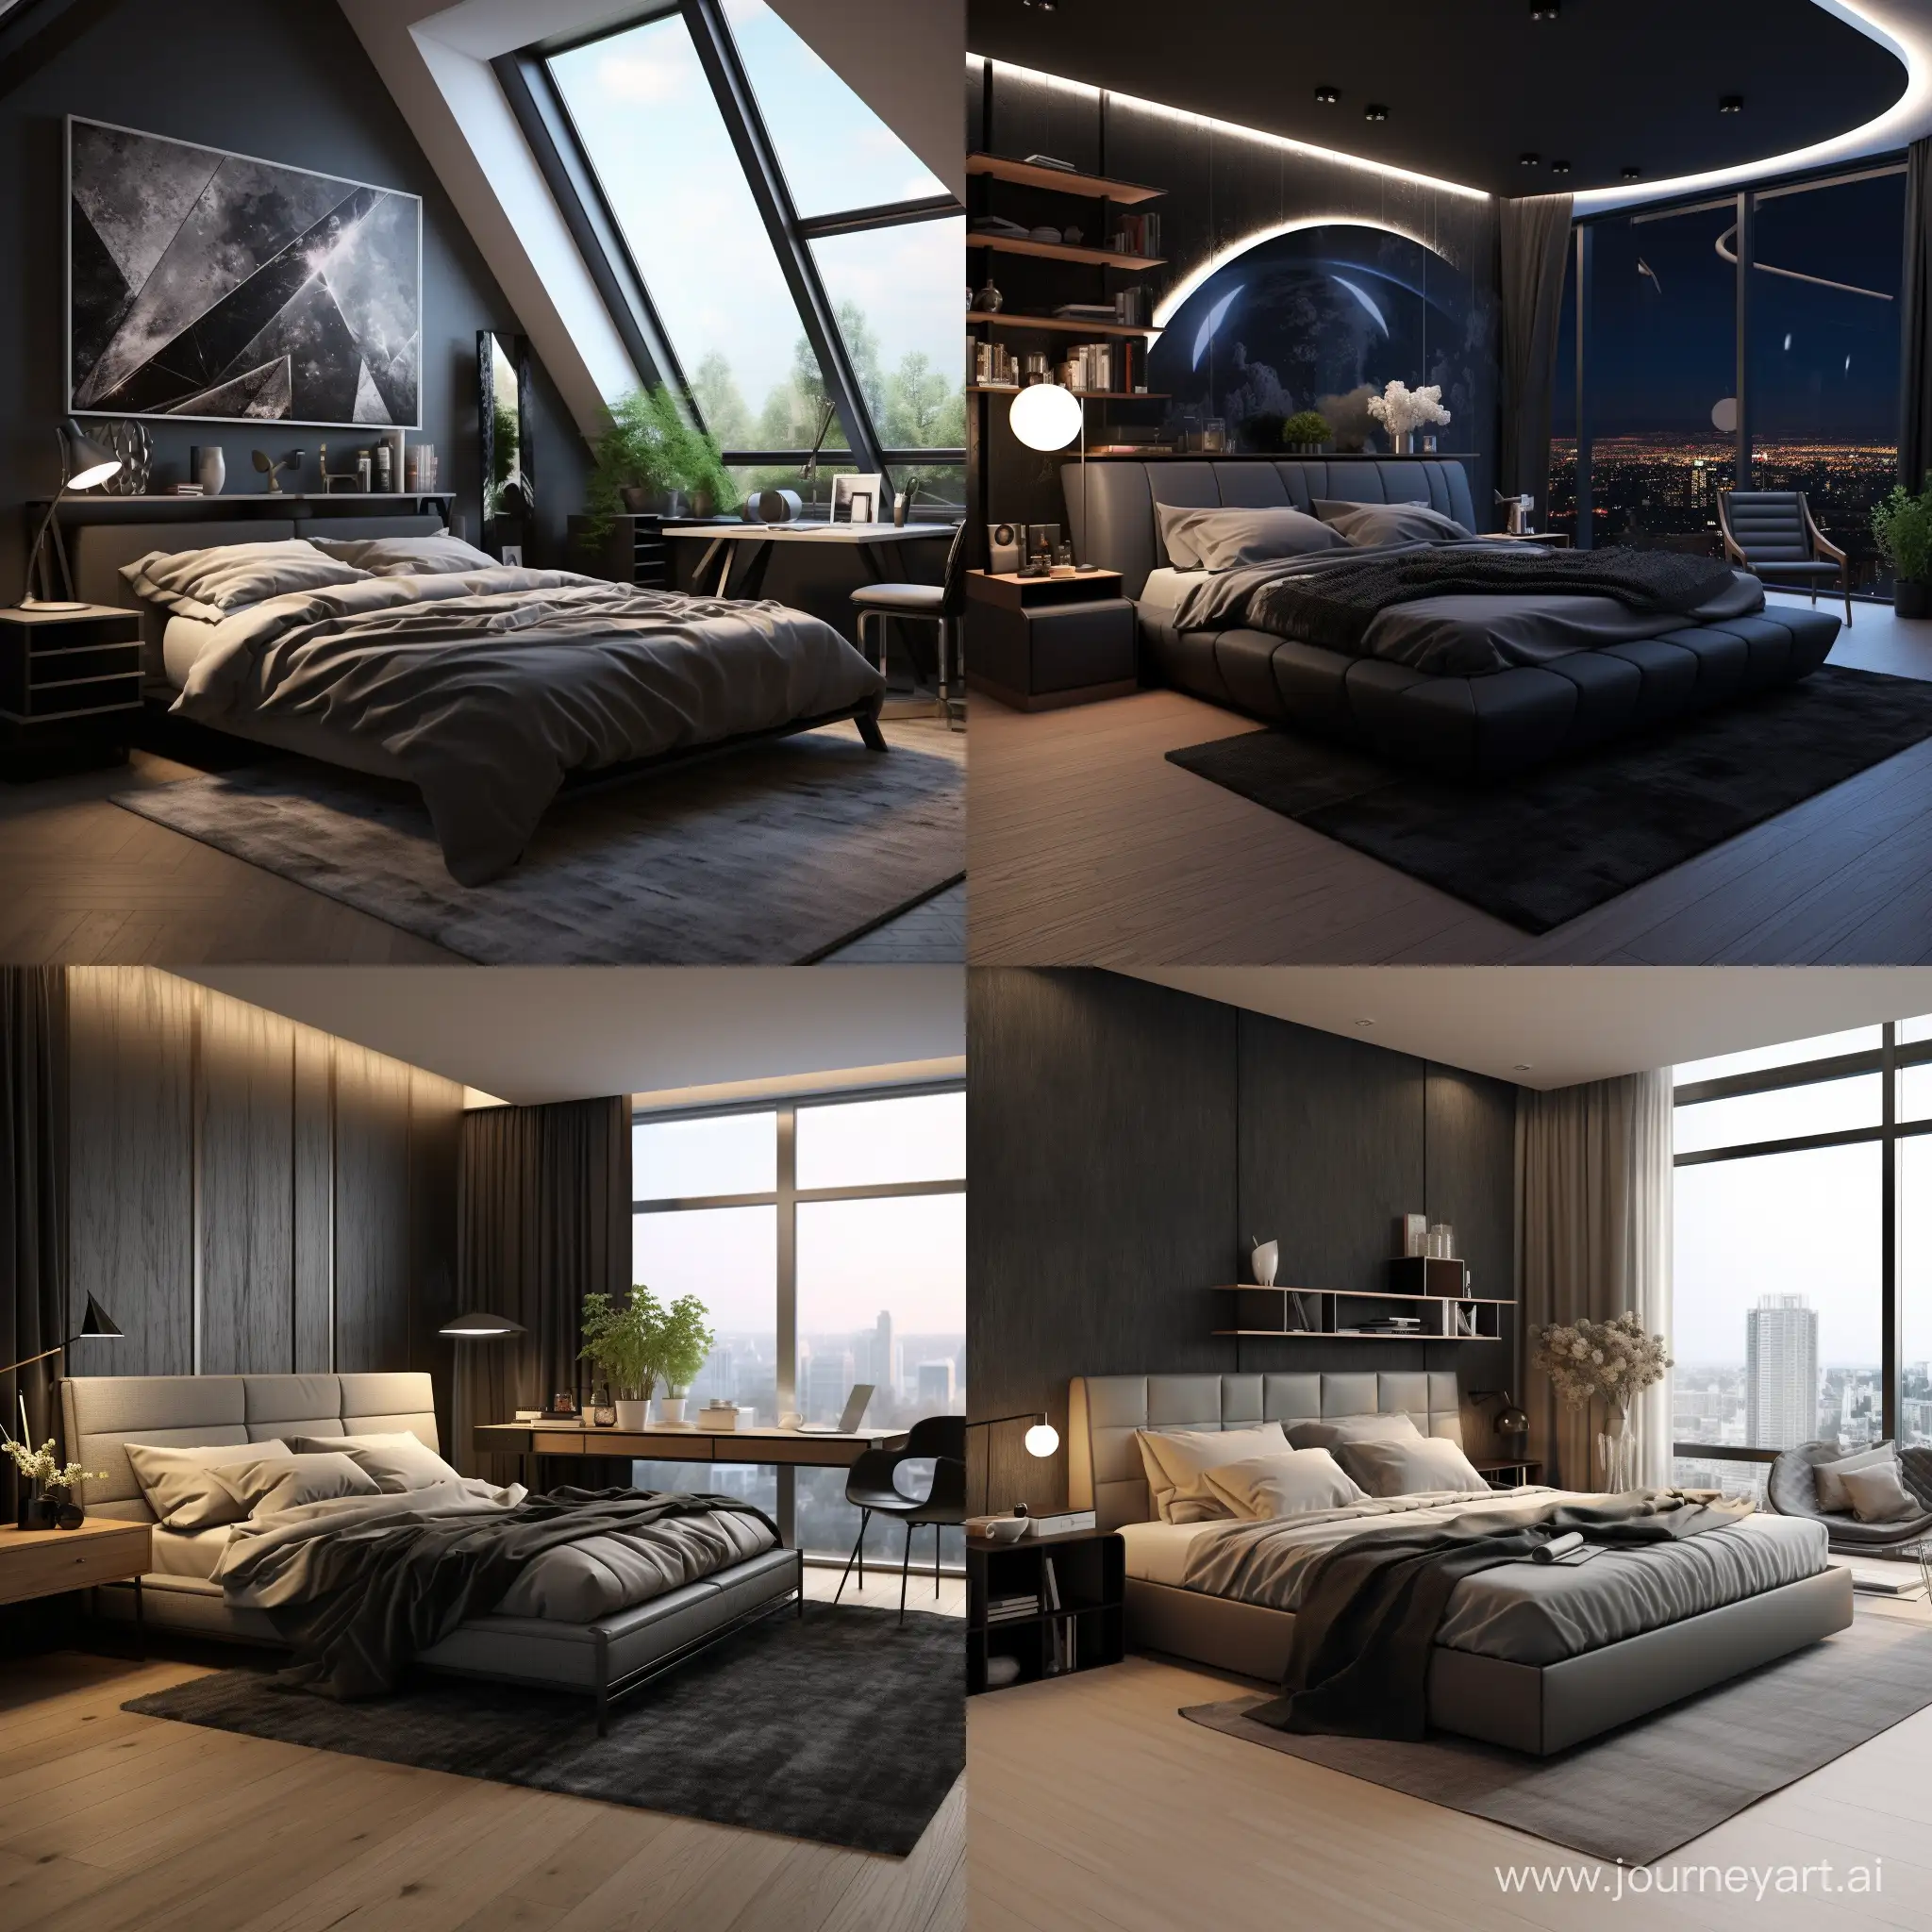 Elegant-4K-Realistic-Bedroom-Design-in-Black-Tones-at-1200-PM